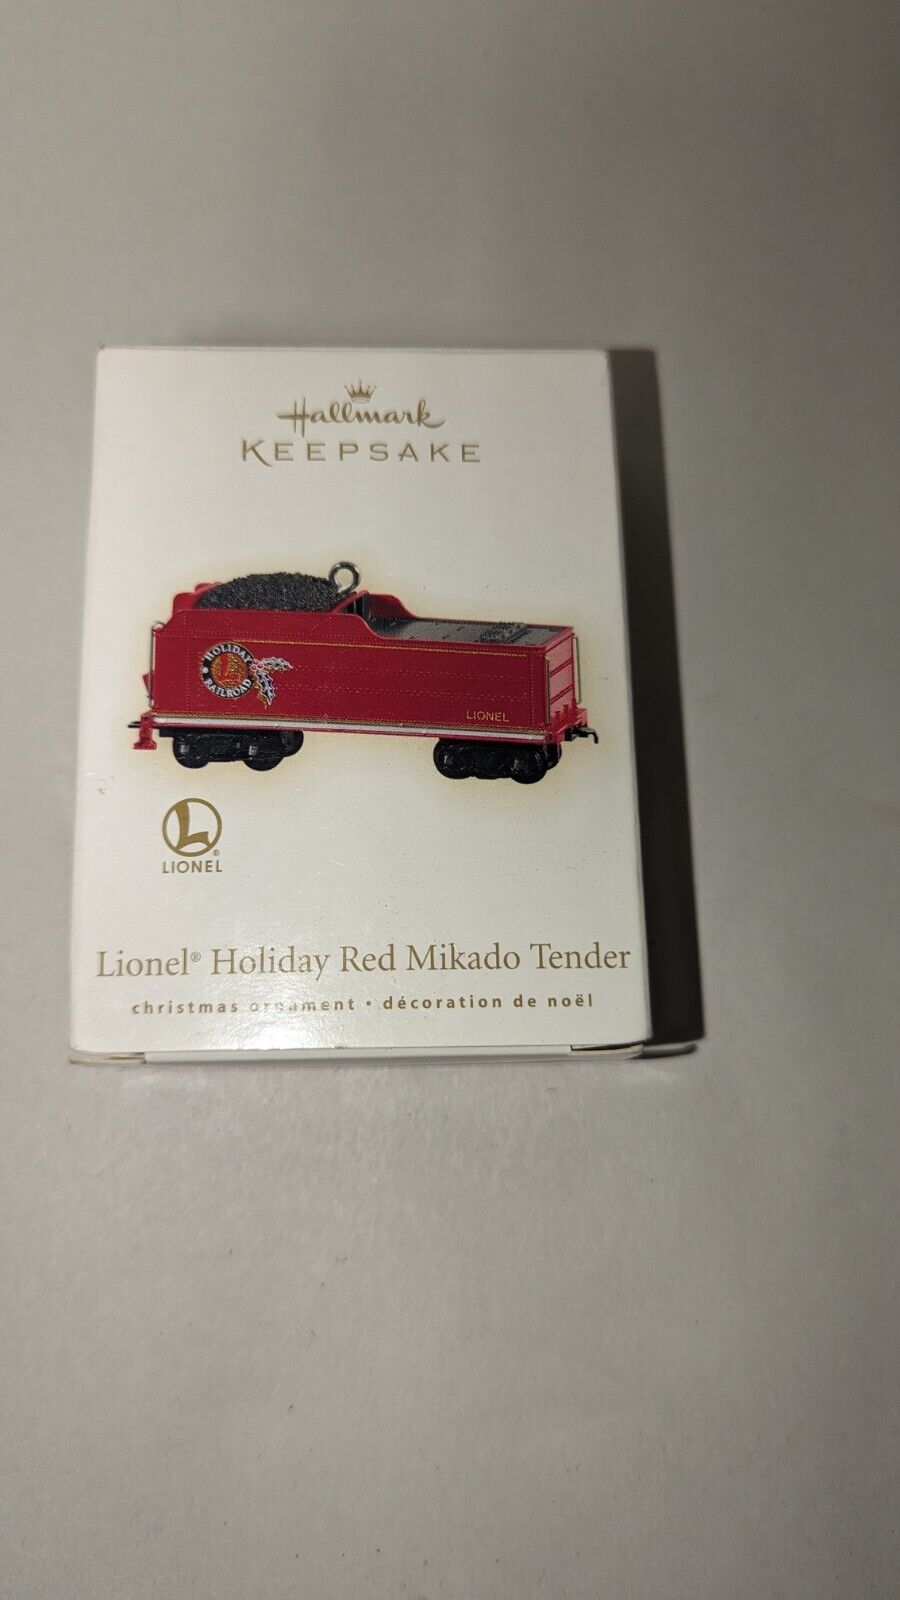 Hallmark Keepsake Lionel Train Ornament - NIB - Red Mikado Tender  